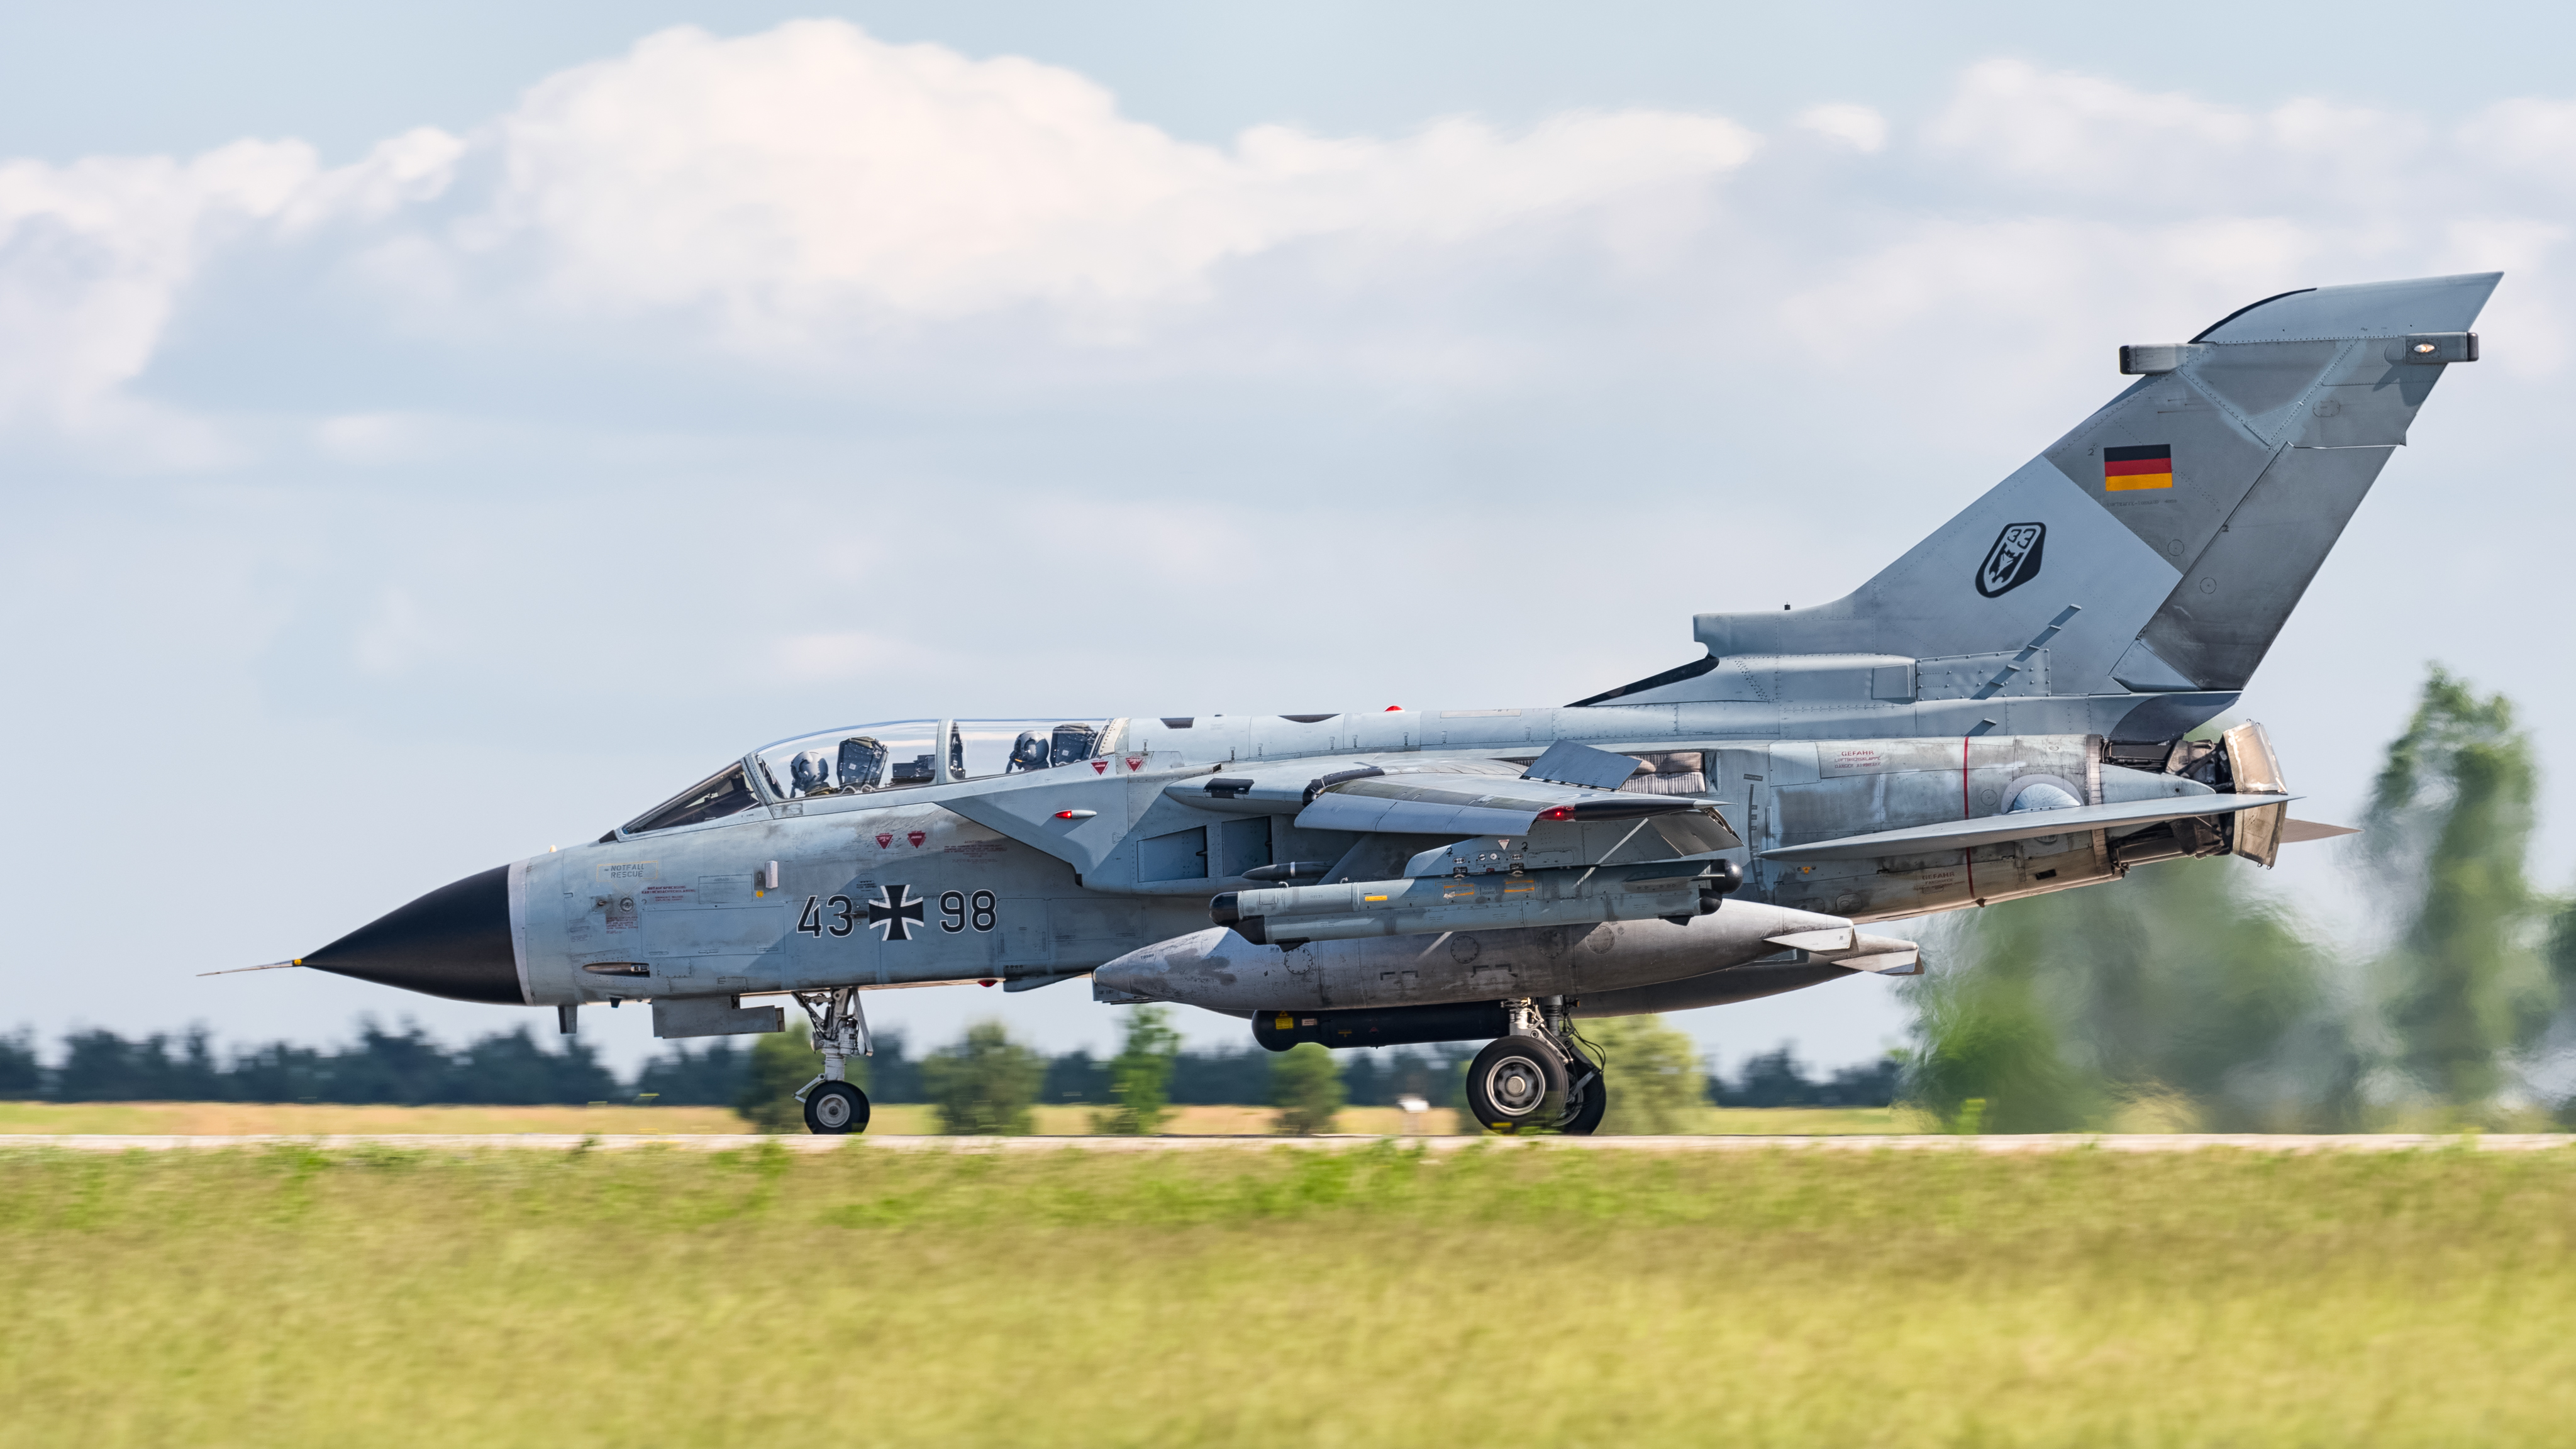 File:43+98 German Air Force Panavia Tornado IDS ILA Berlin 2016 06.jpg - Wikimedia Commons